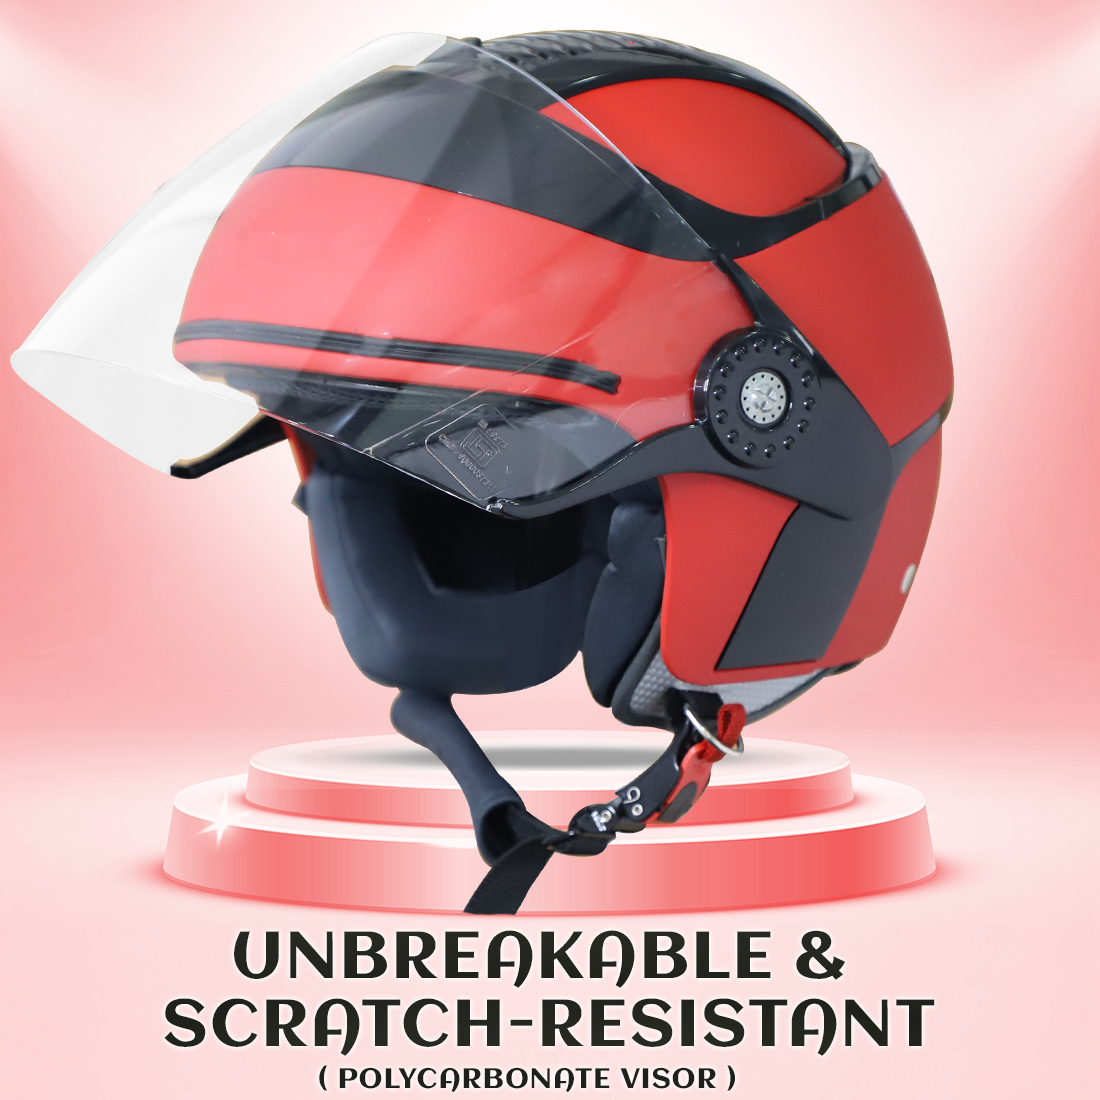 Steelbird SB-29 AER ISI Certified Helmet For Men And Women (Matt Red Black With Clear Visor)